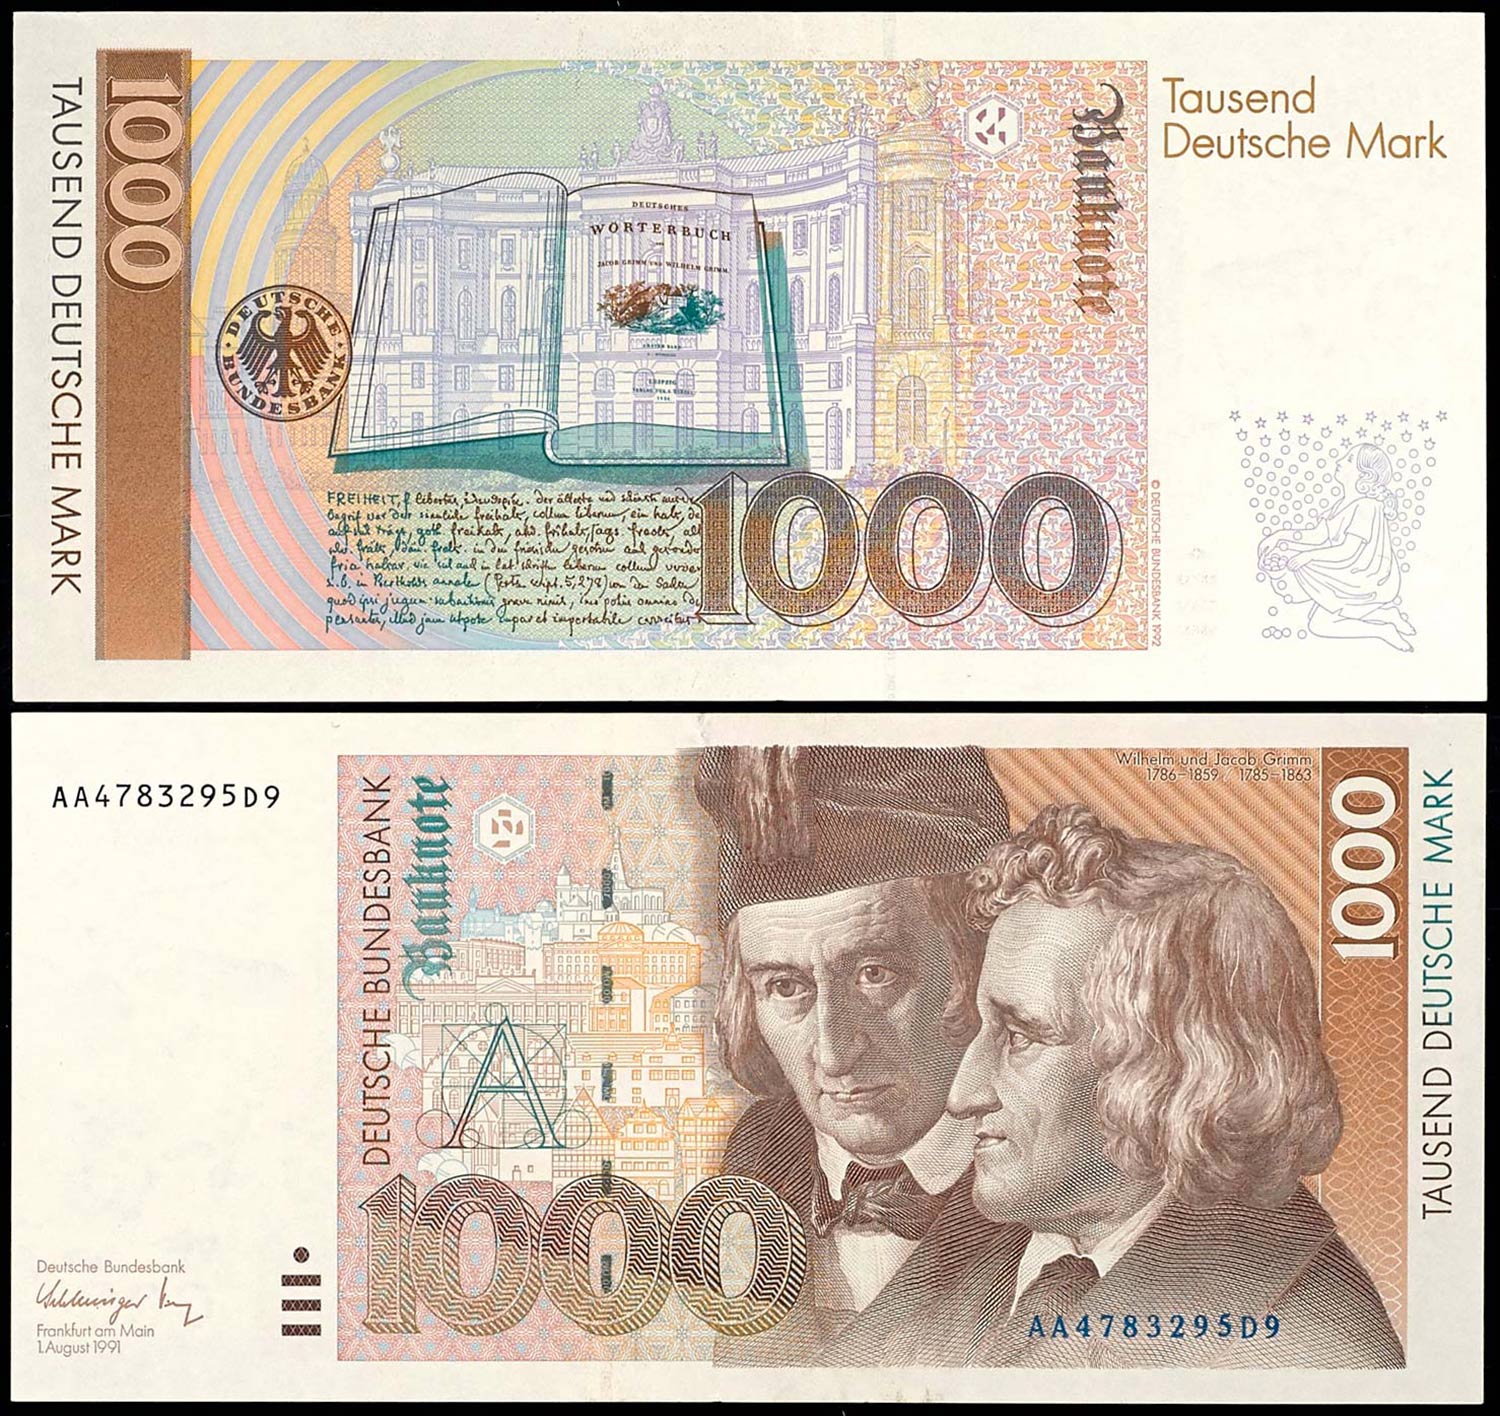 Deutsche mark. Немецкие марки деньги. Немецкие марки валюта. 500 Немецких марок. Немецкие марки до евро.